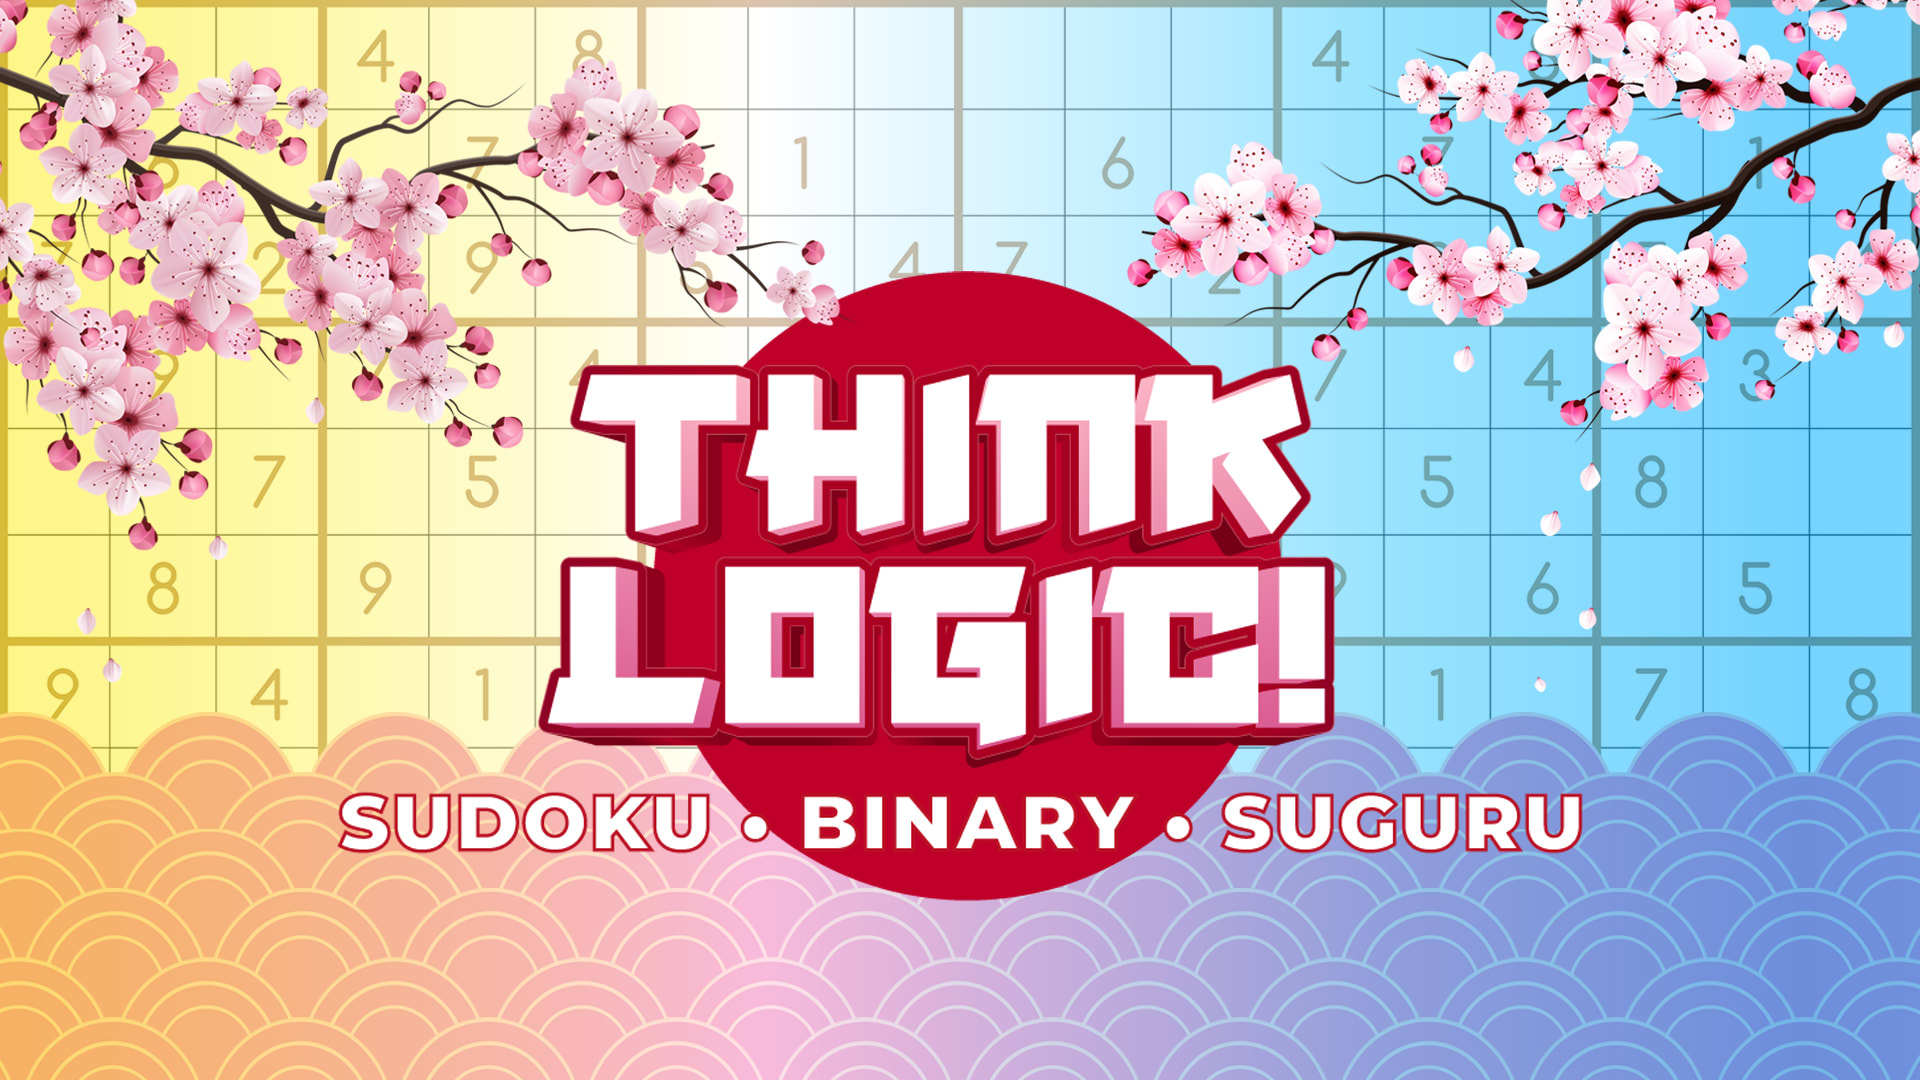 Think Logic! Sudoku - Binary - Suguru